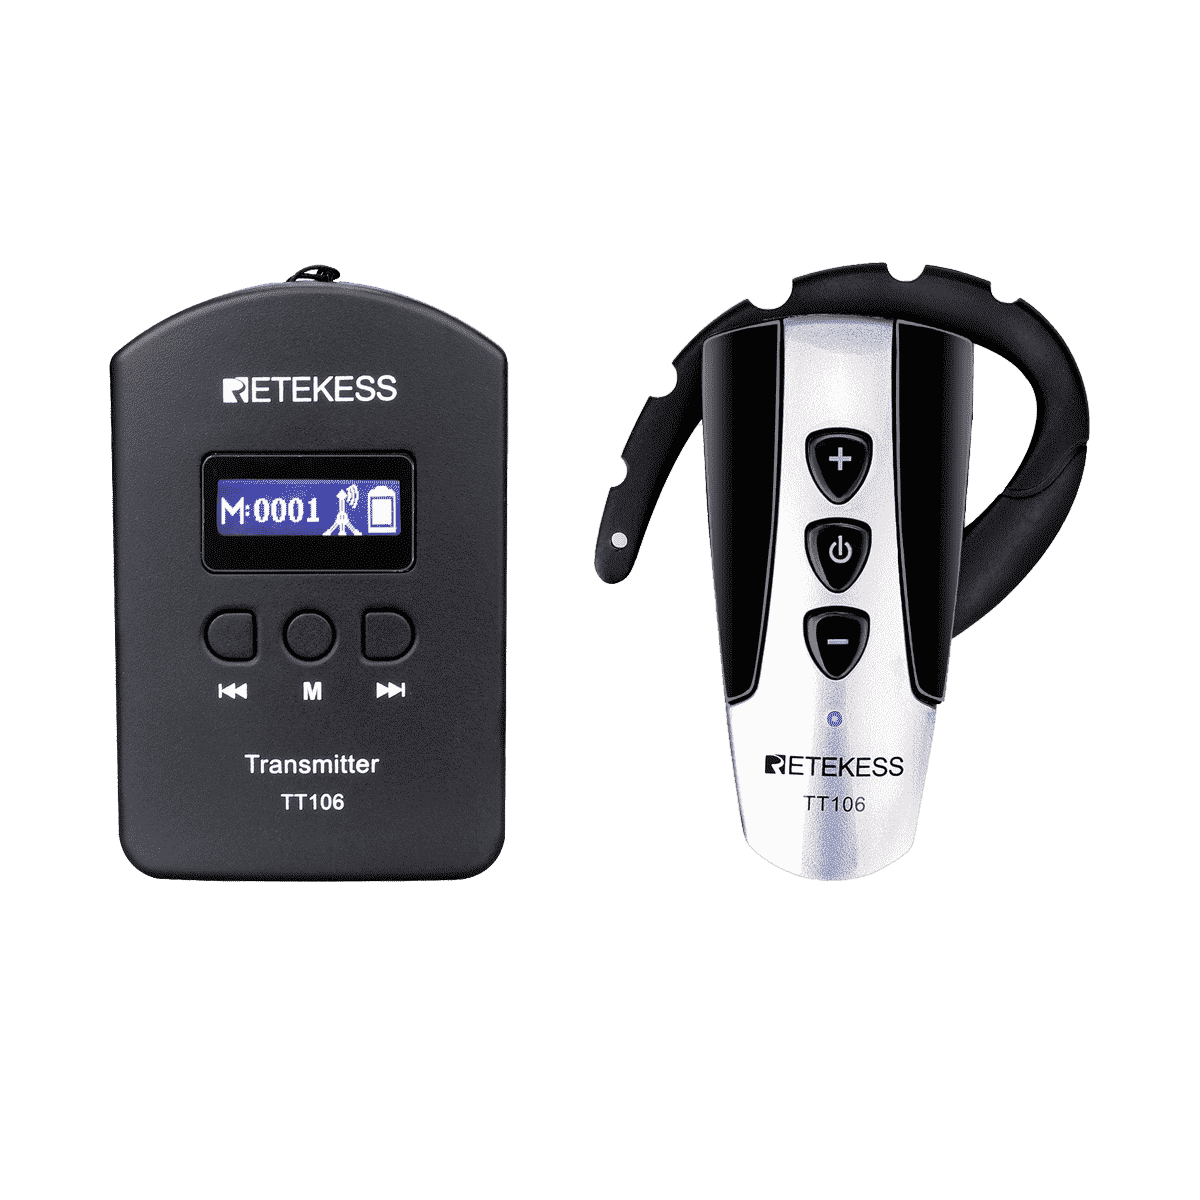 Retekess TT106 wireless audio guide system